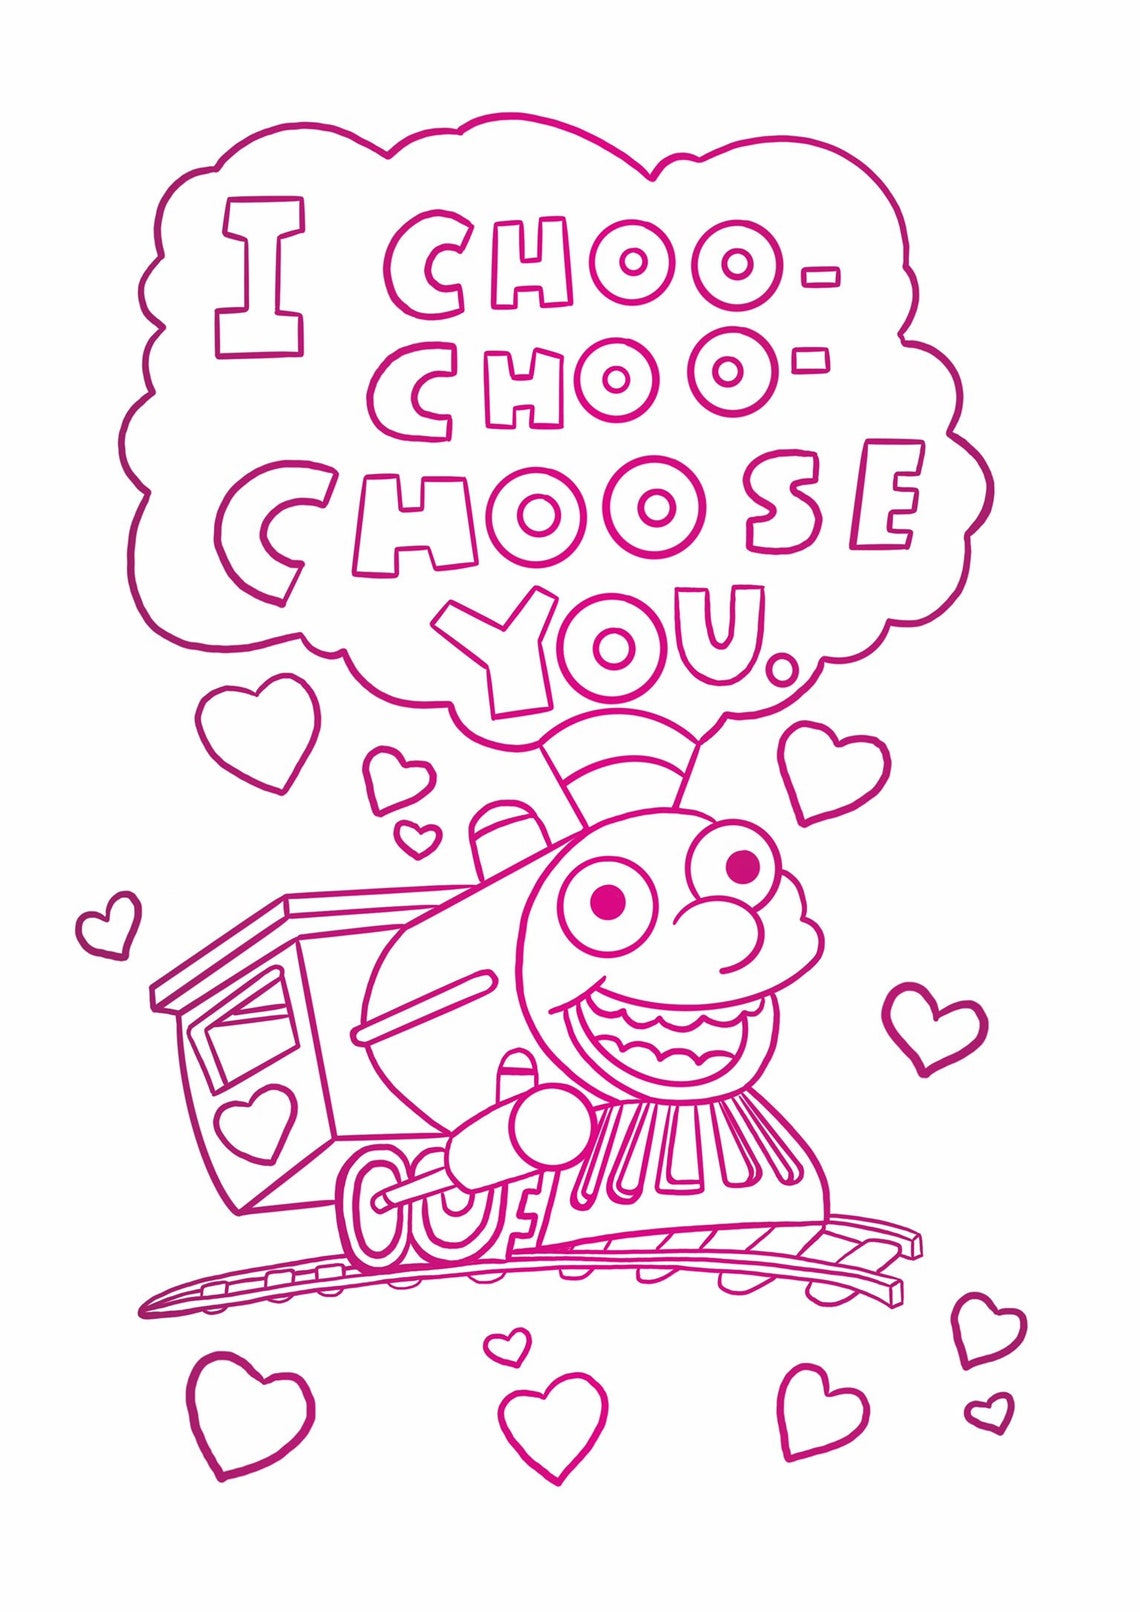 i-choo-choo-choose-you-valentine-s-day-foil-print-a4-etsy